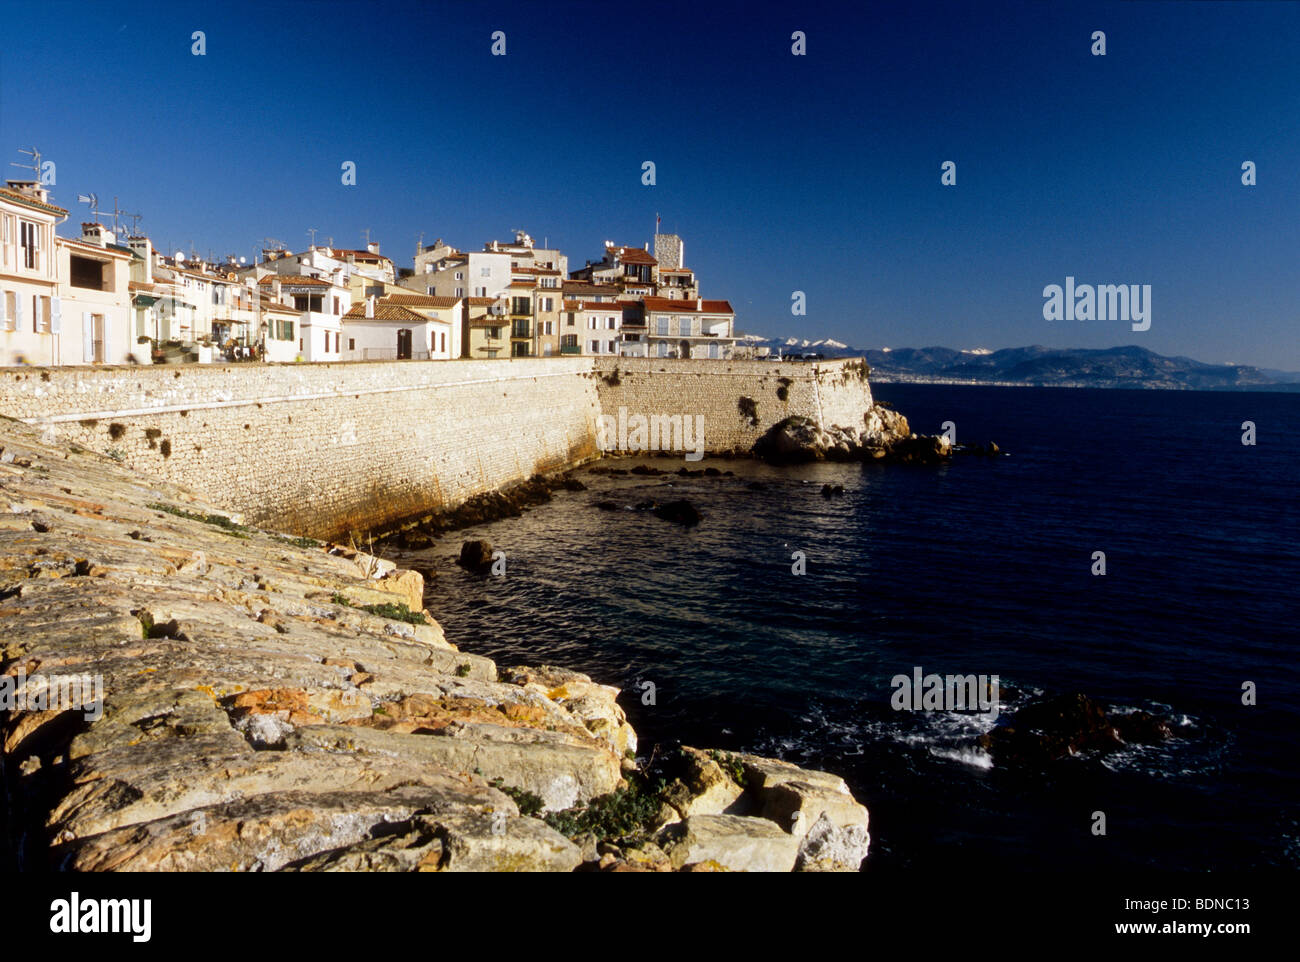 The Vauban rampart of Antibes city Stock Photo